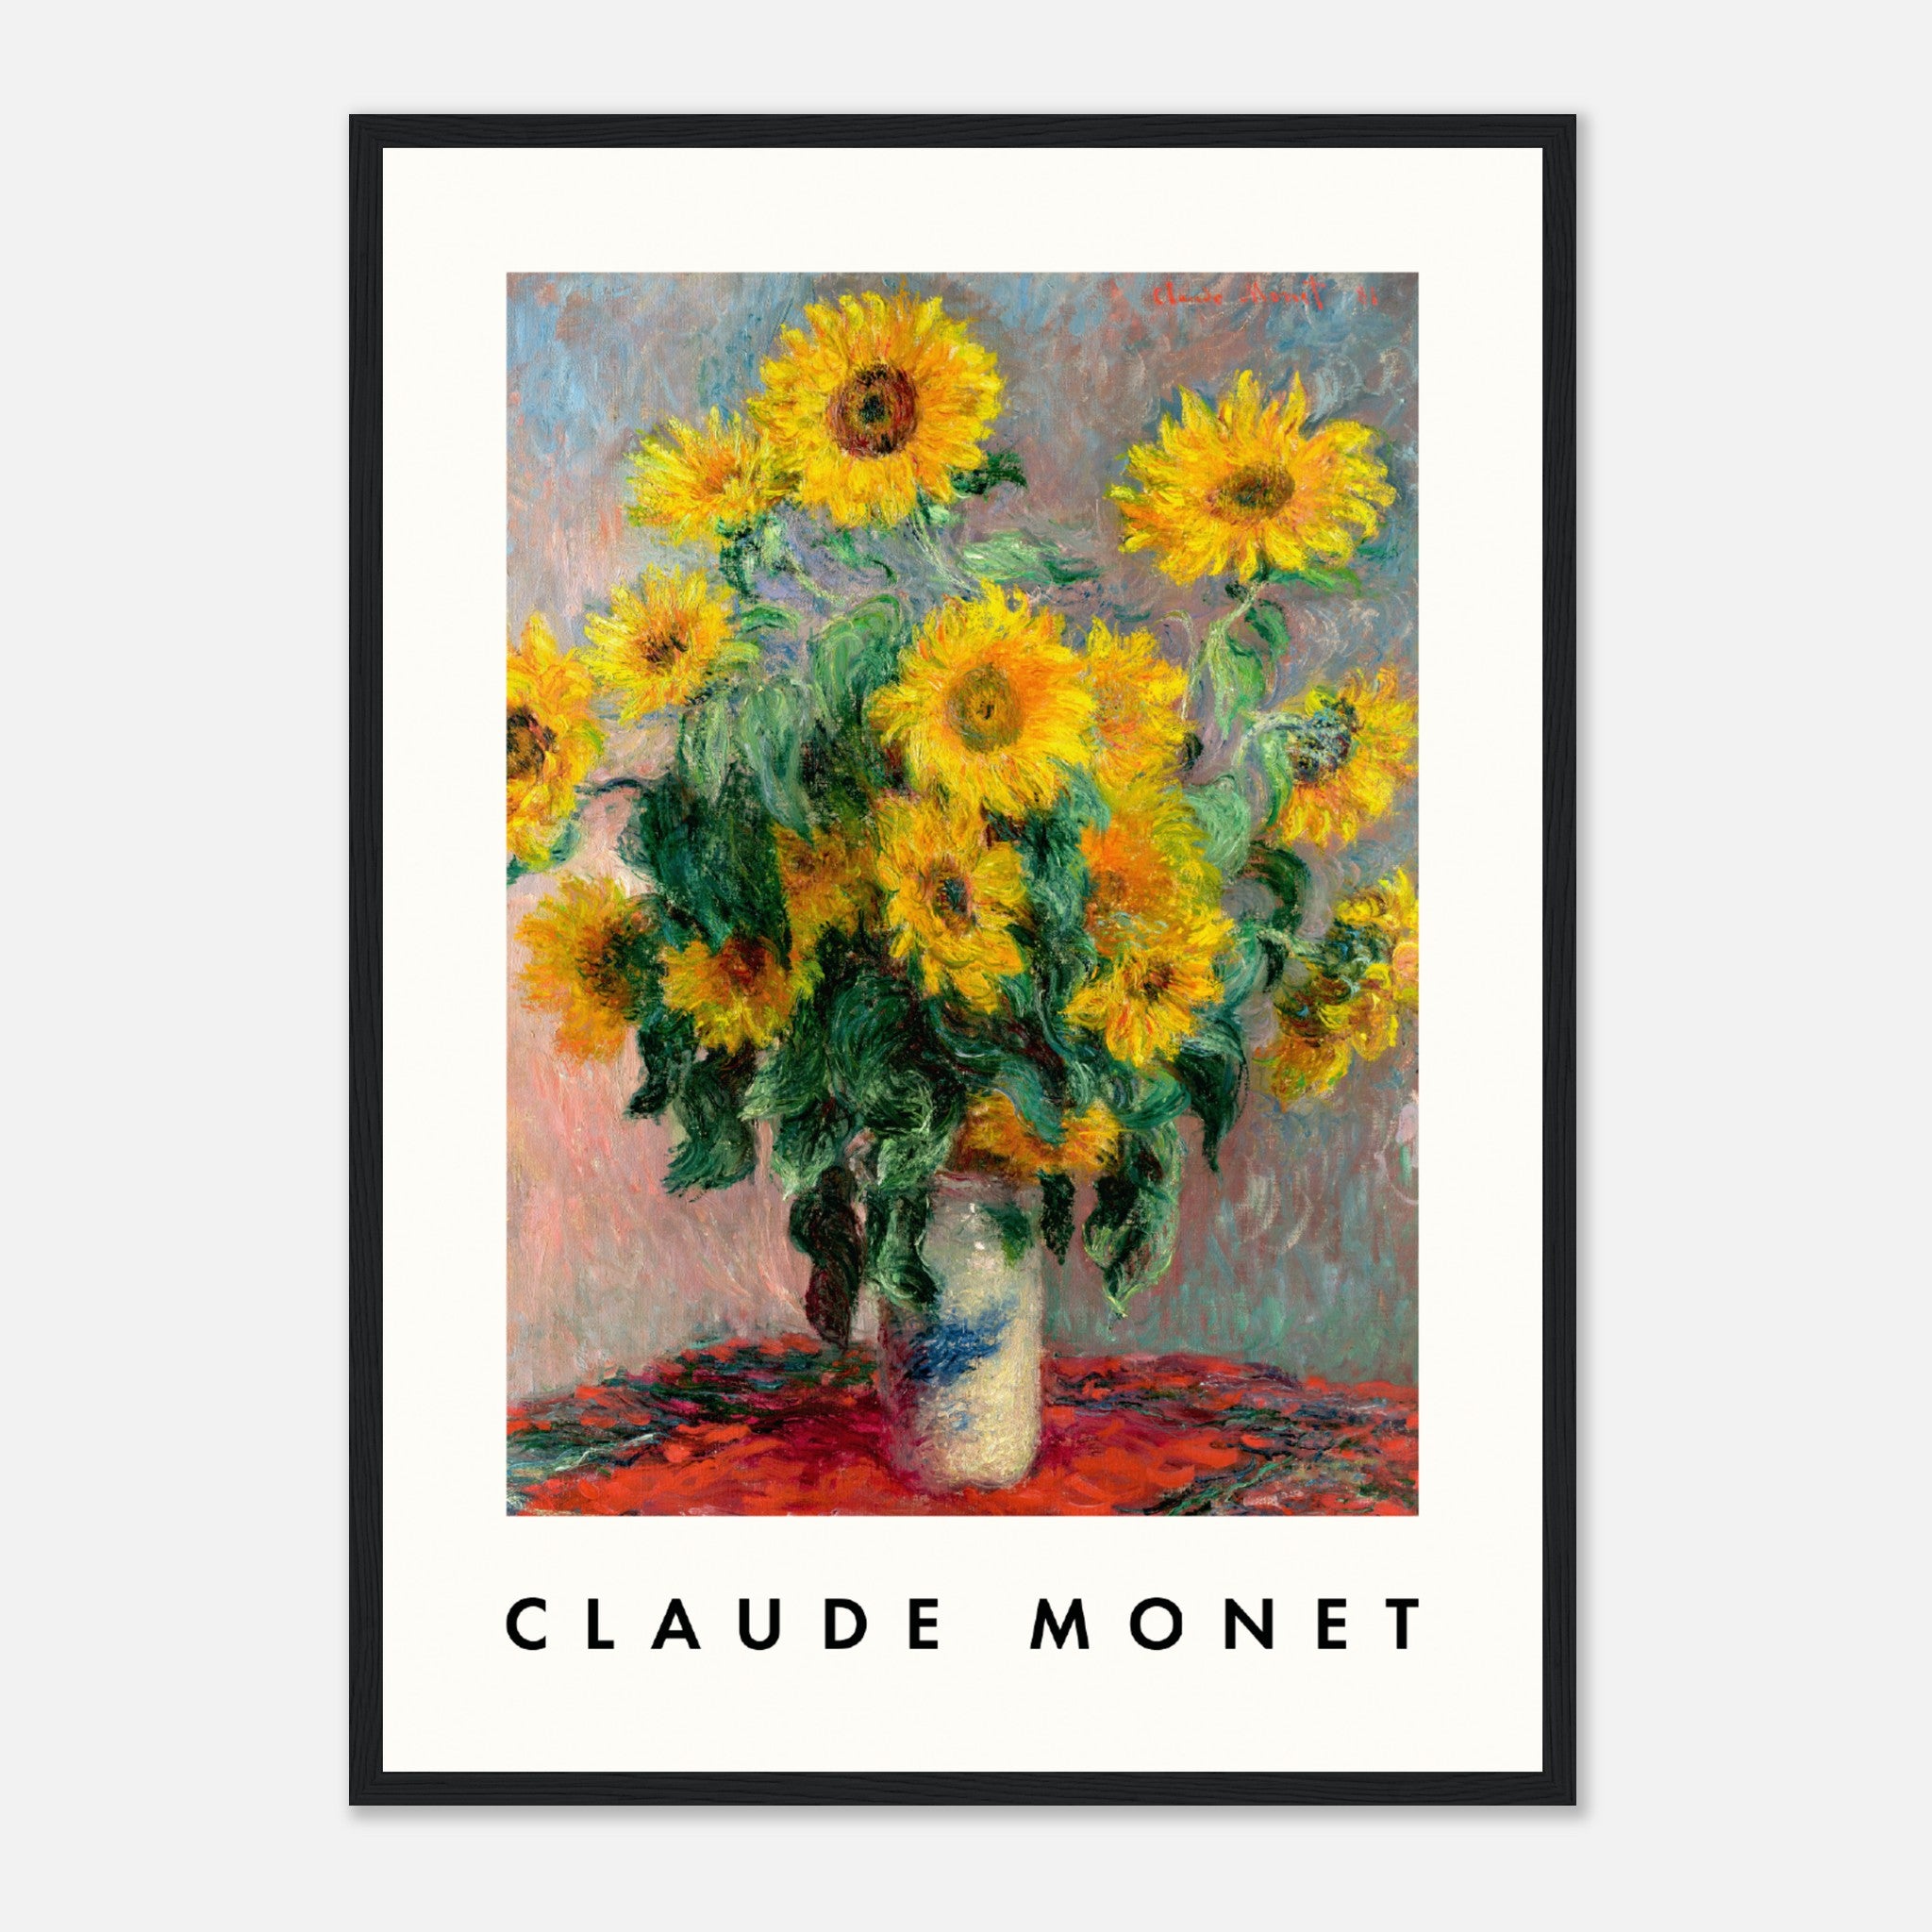 Claude Monet - Bouquet Of Sunflowers Poster